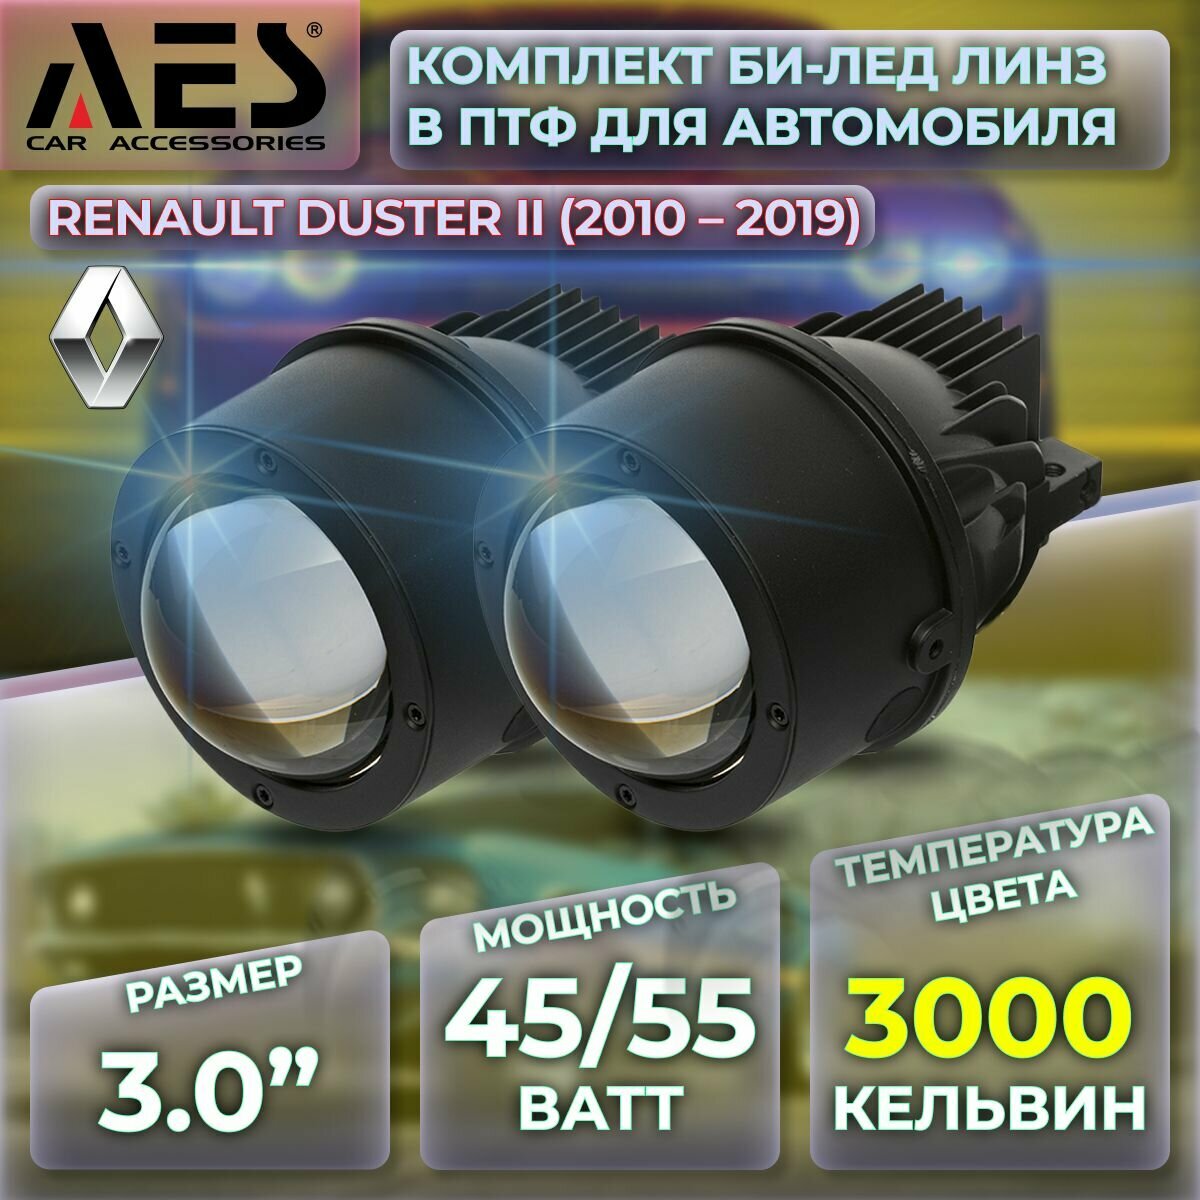 Комплект Би-лед линз в ПТФ для Renault Duster II (2010-2019) Q8 Foglight Bi-LED Laser 3000K (2 модуля 2 кронштейна)